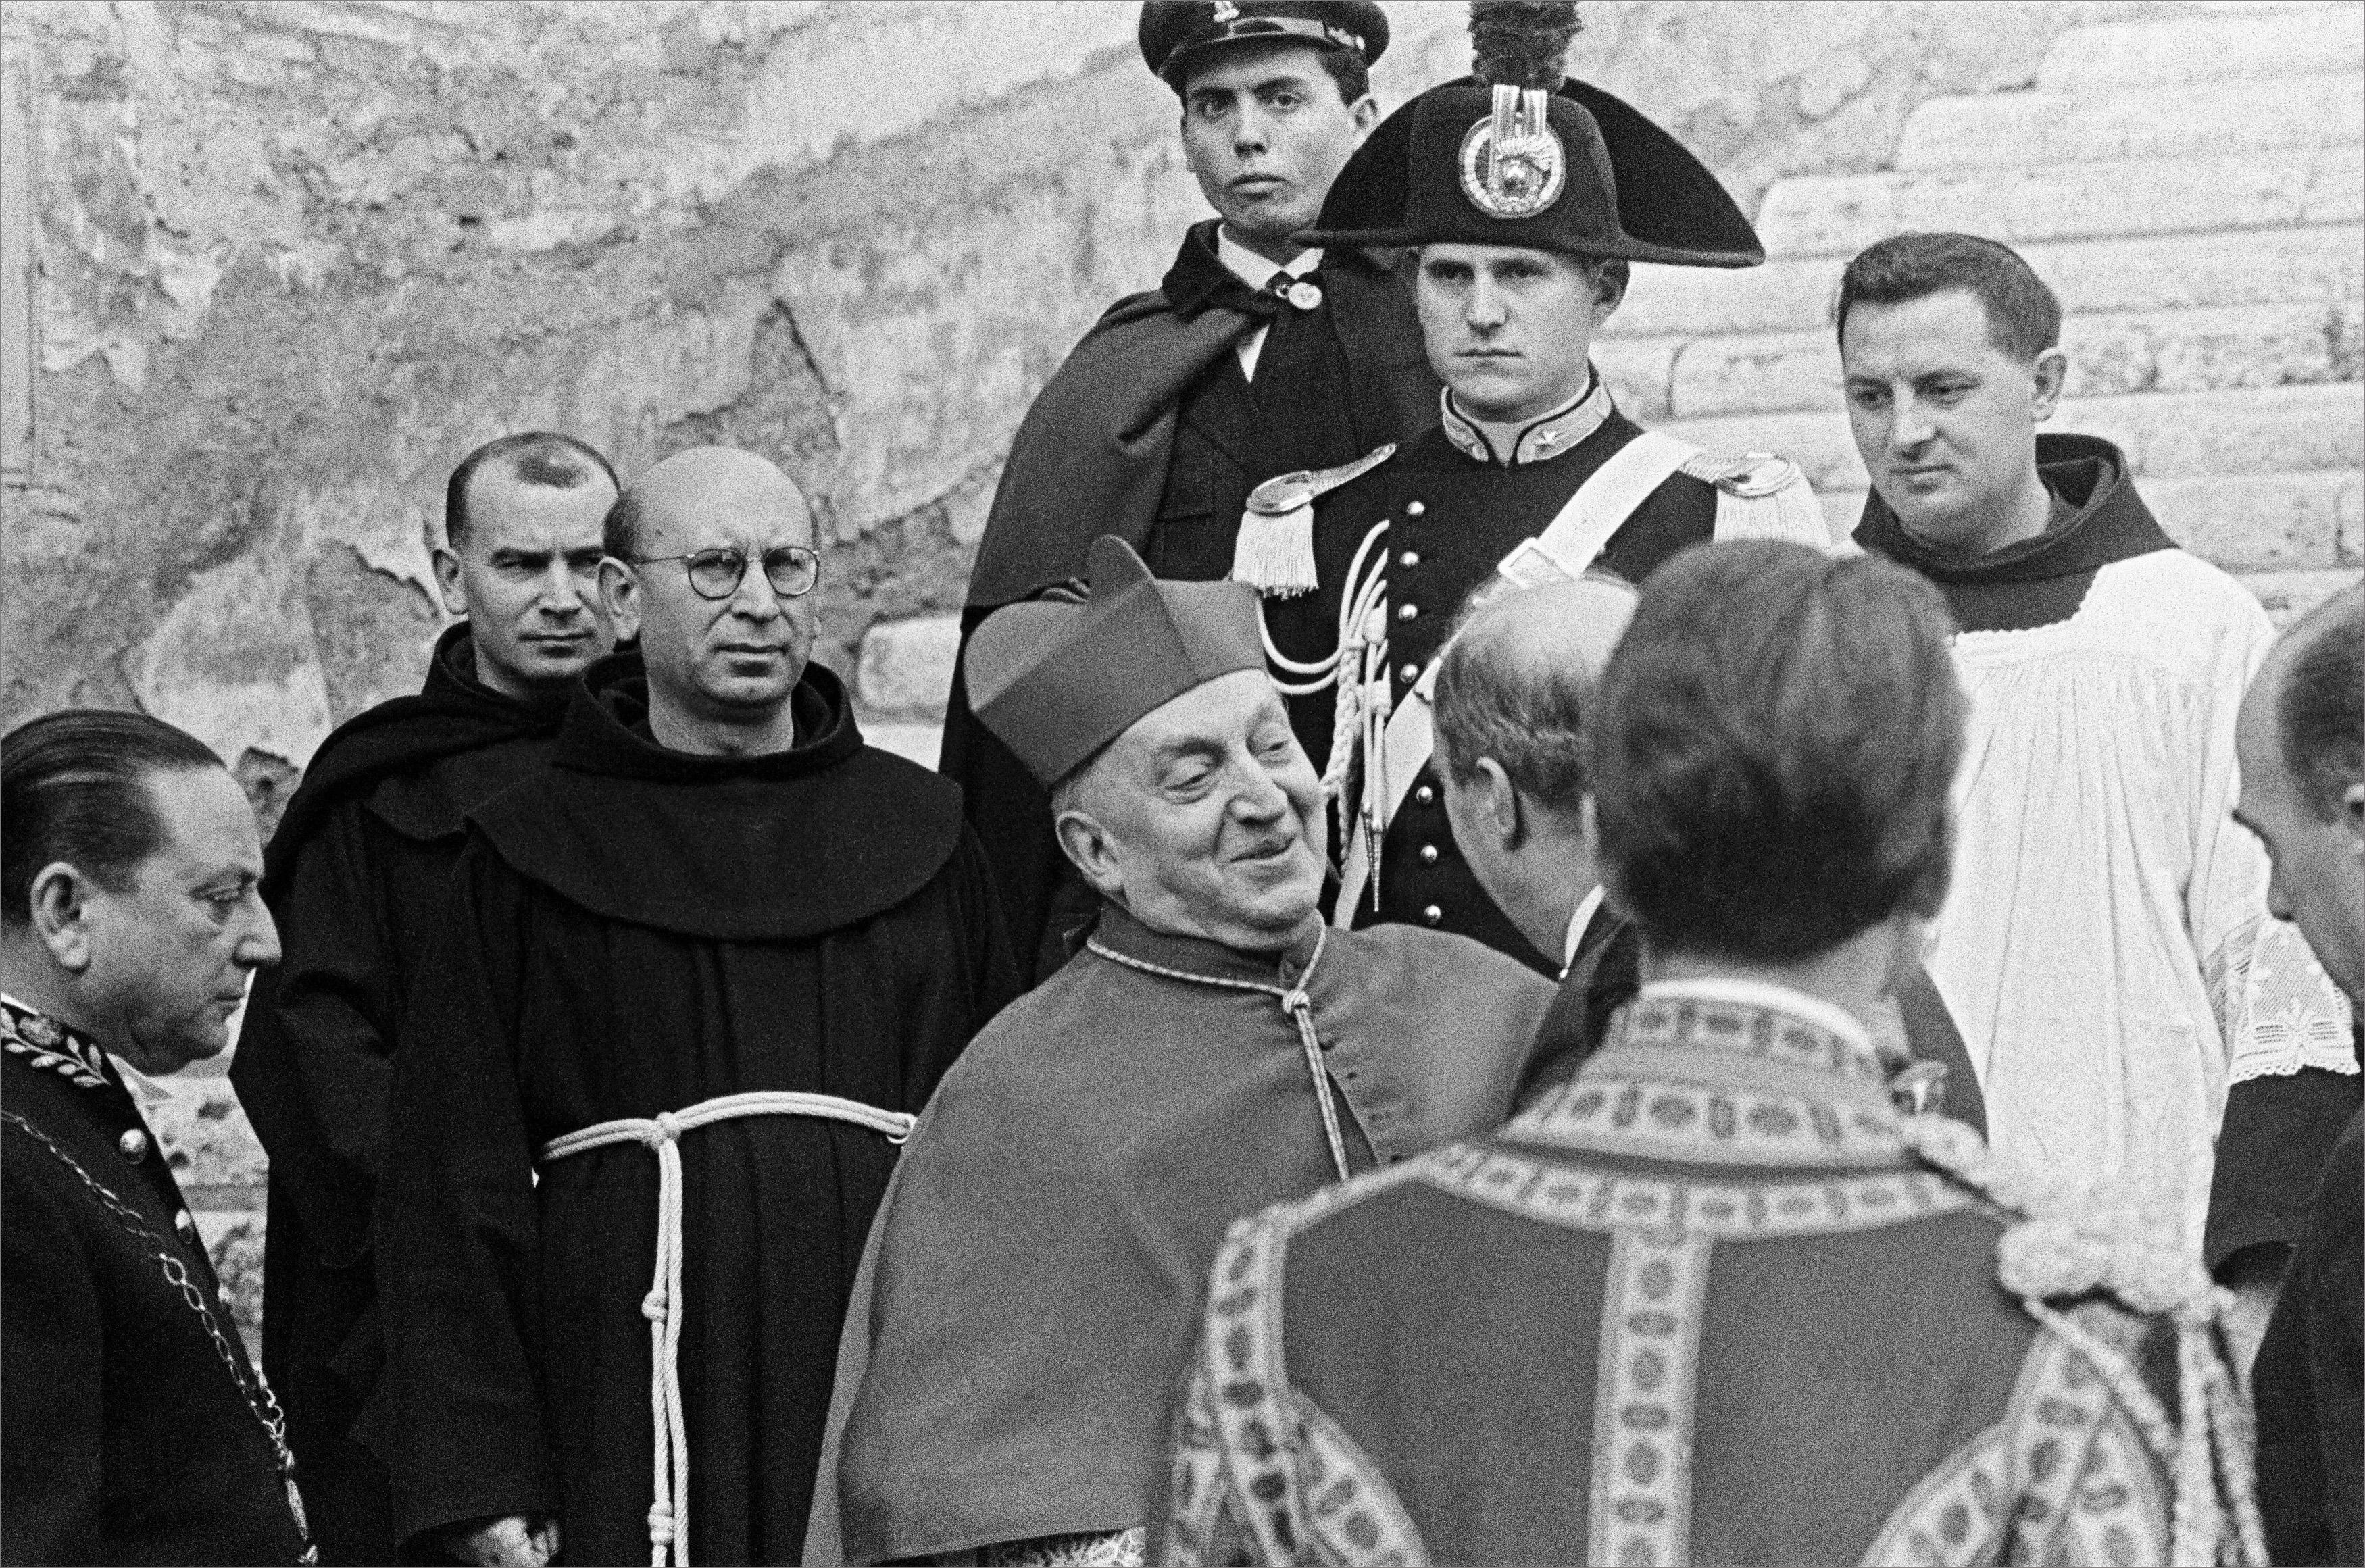 100th Anniversary Celebration Coffret # 3 - Roma  - 1956 - Vintage Photography - Gray Black and White Photograph by Fabrizio La Torre